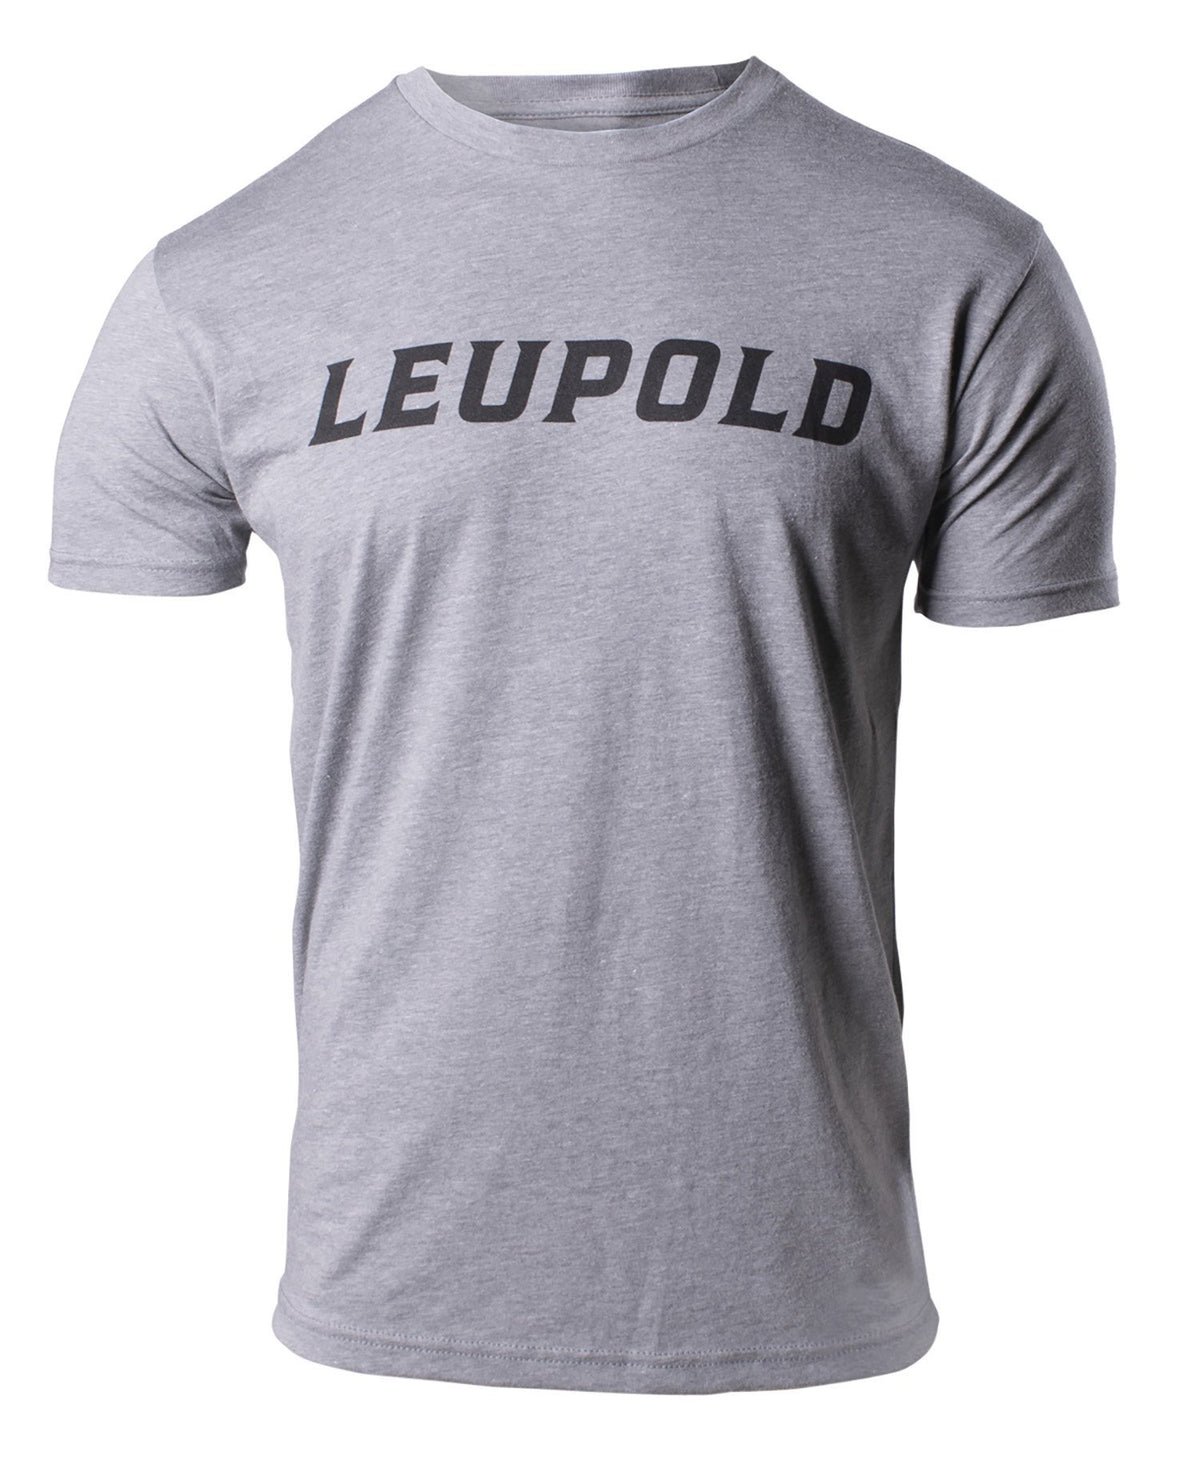 Leupold Wordmark T-Shirt Graphite Heather 2XL Short Sleeve - Pacific Flyway Supplies